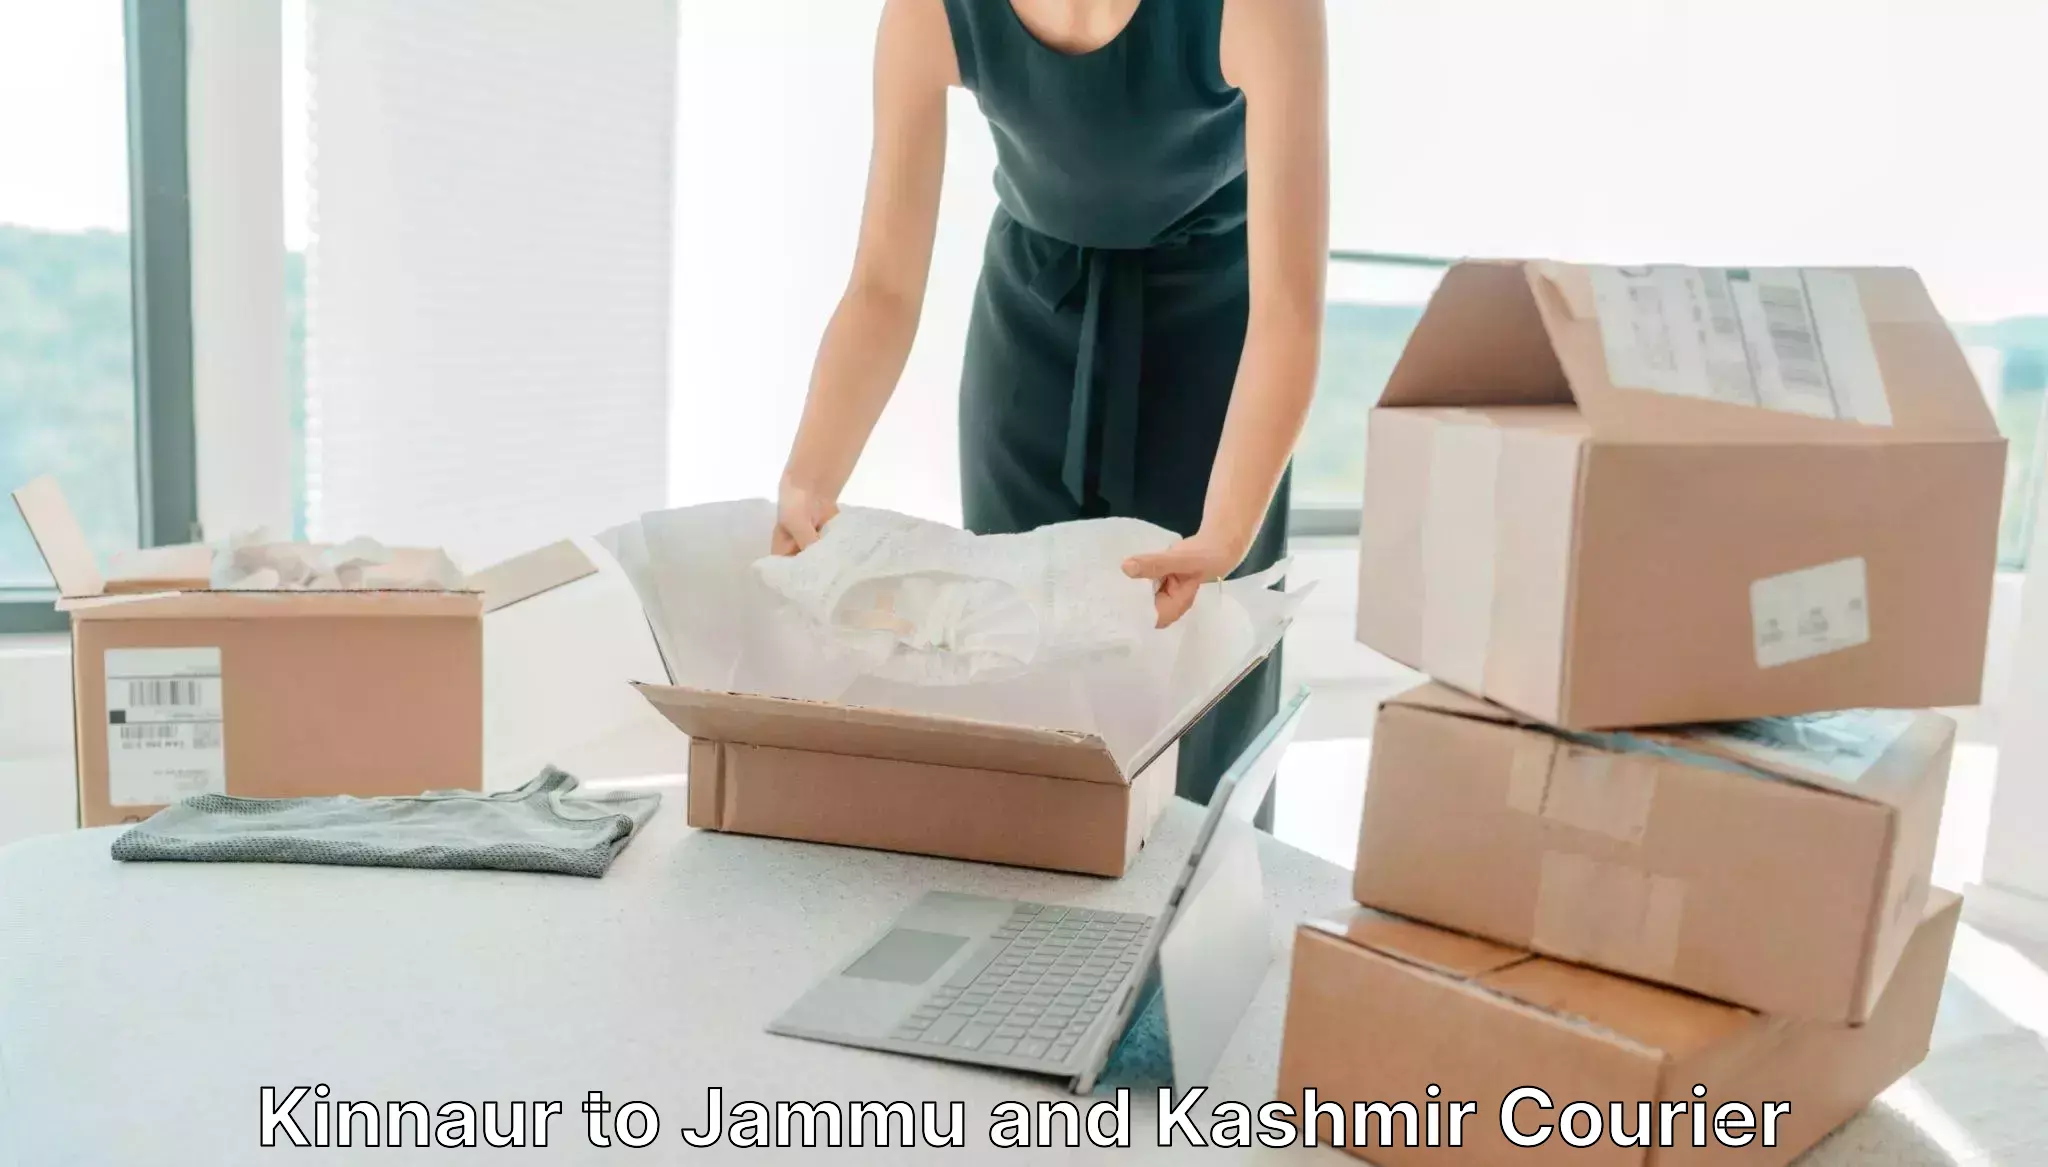 On-call courier service Kinnaur to Pulwama